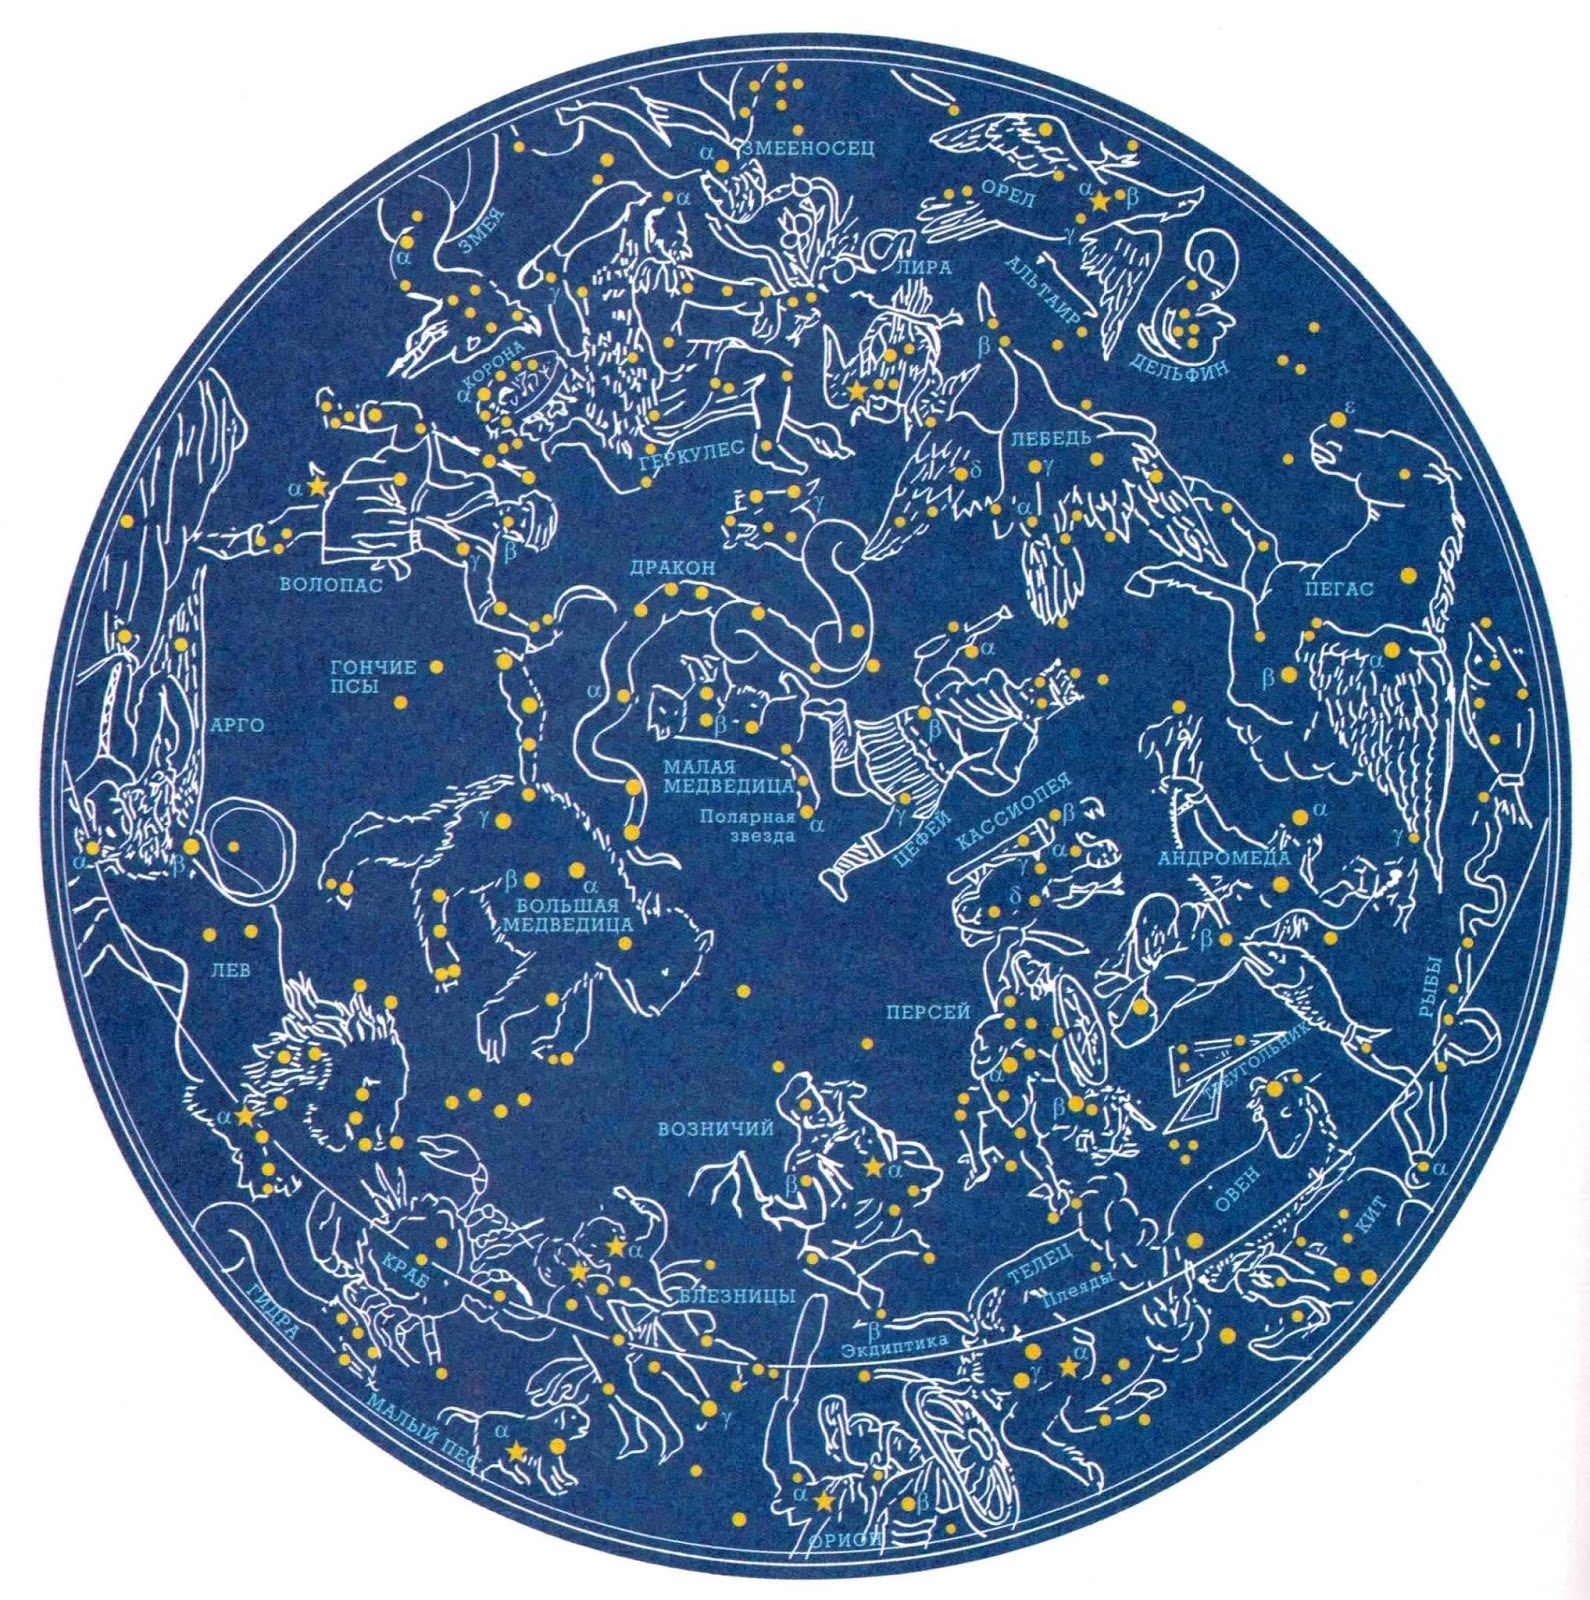 Атлас северного полушария. Звездный атлас Северного полушария. Атлас созвездий звездного неба. Звёздная карта неба Северного полушария. Звёздная карта неба созвездия.